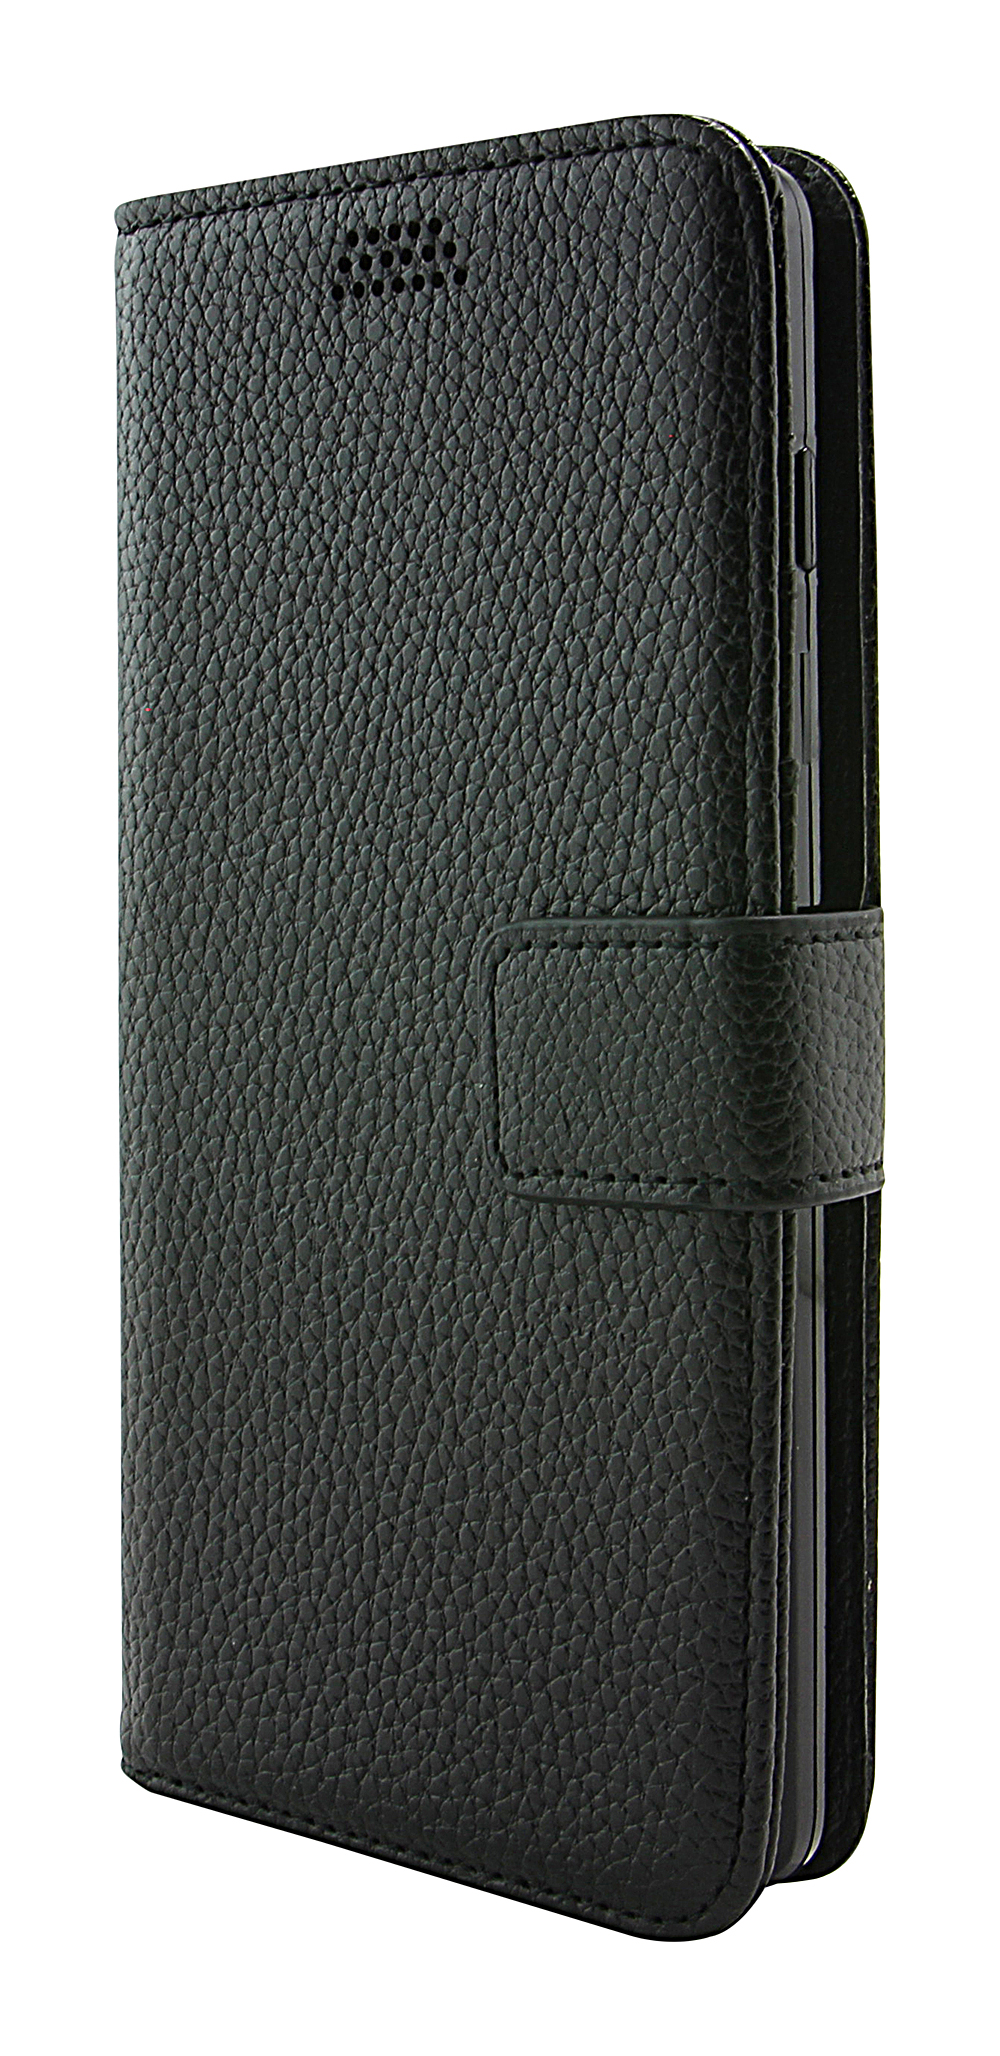 billigamobilskydd.seNew Standcase Wallet Sony Xperia L3